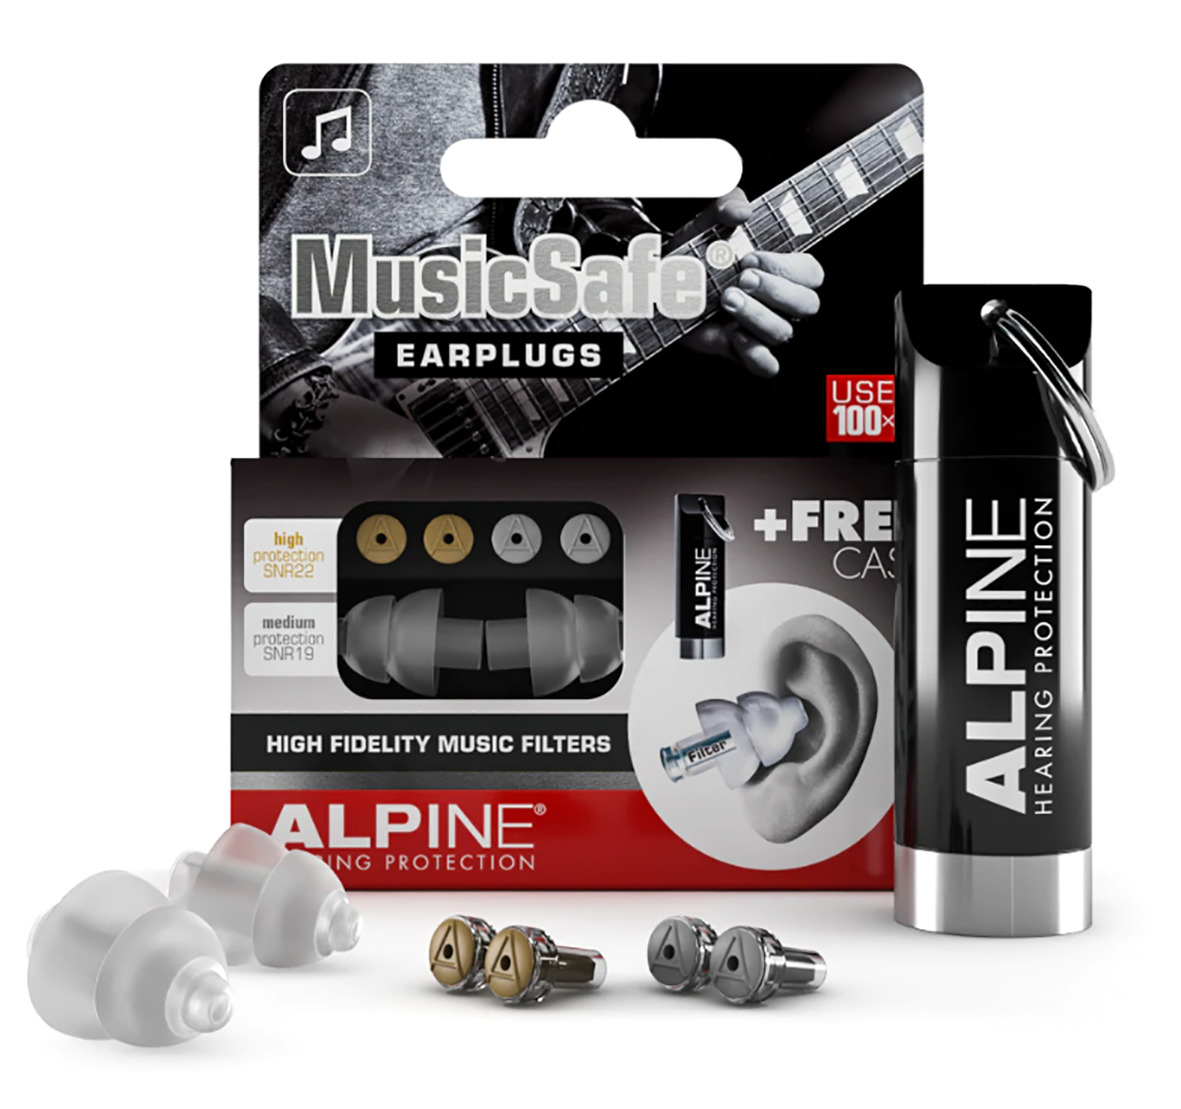 Alpine Musicsafe Ear Plugs Professional Musicians Hearing Protection